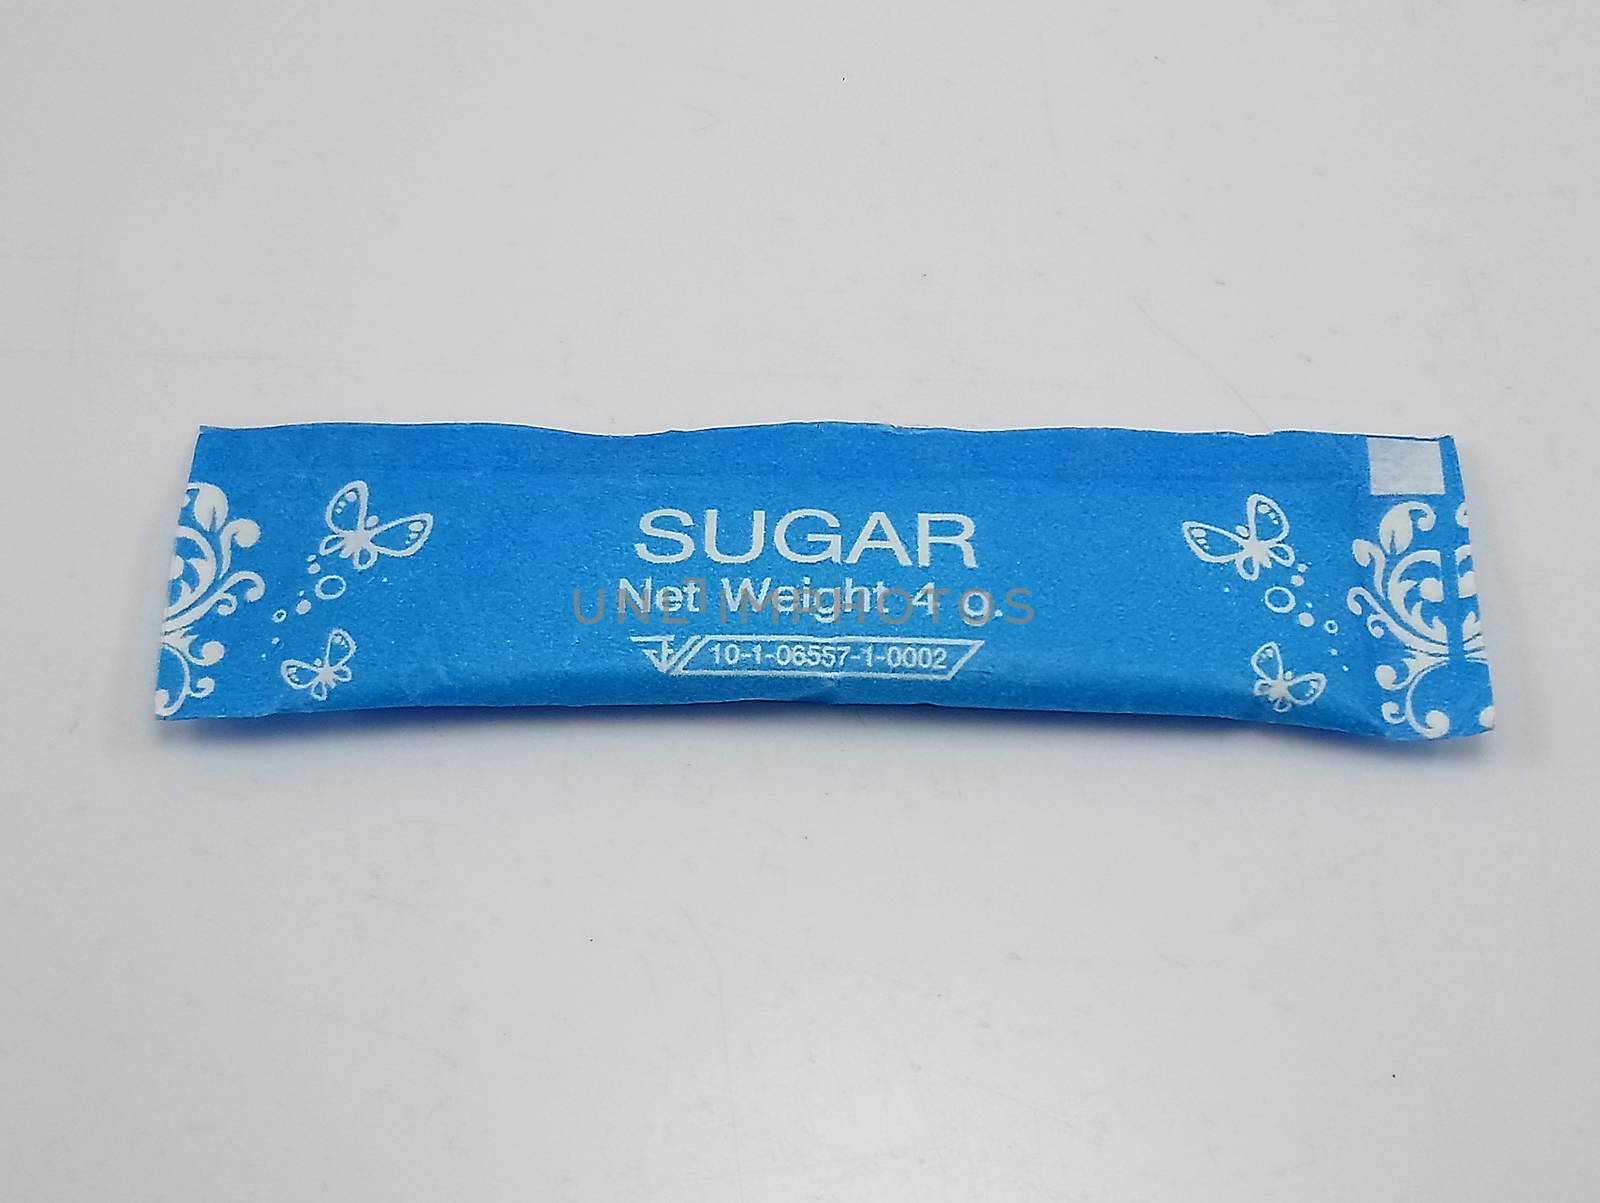 Sugar sachet in Manila, Philippines by imwaltersy